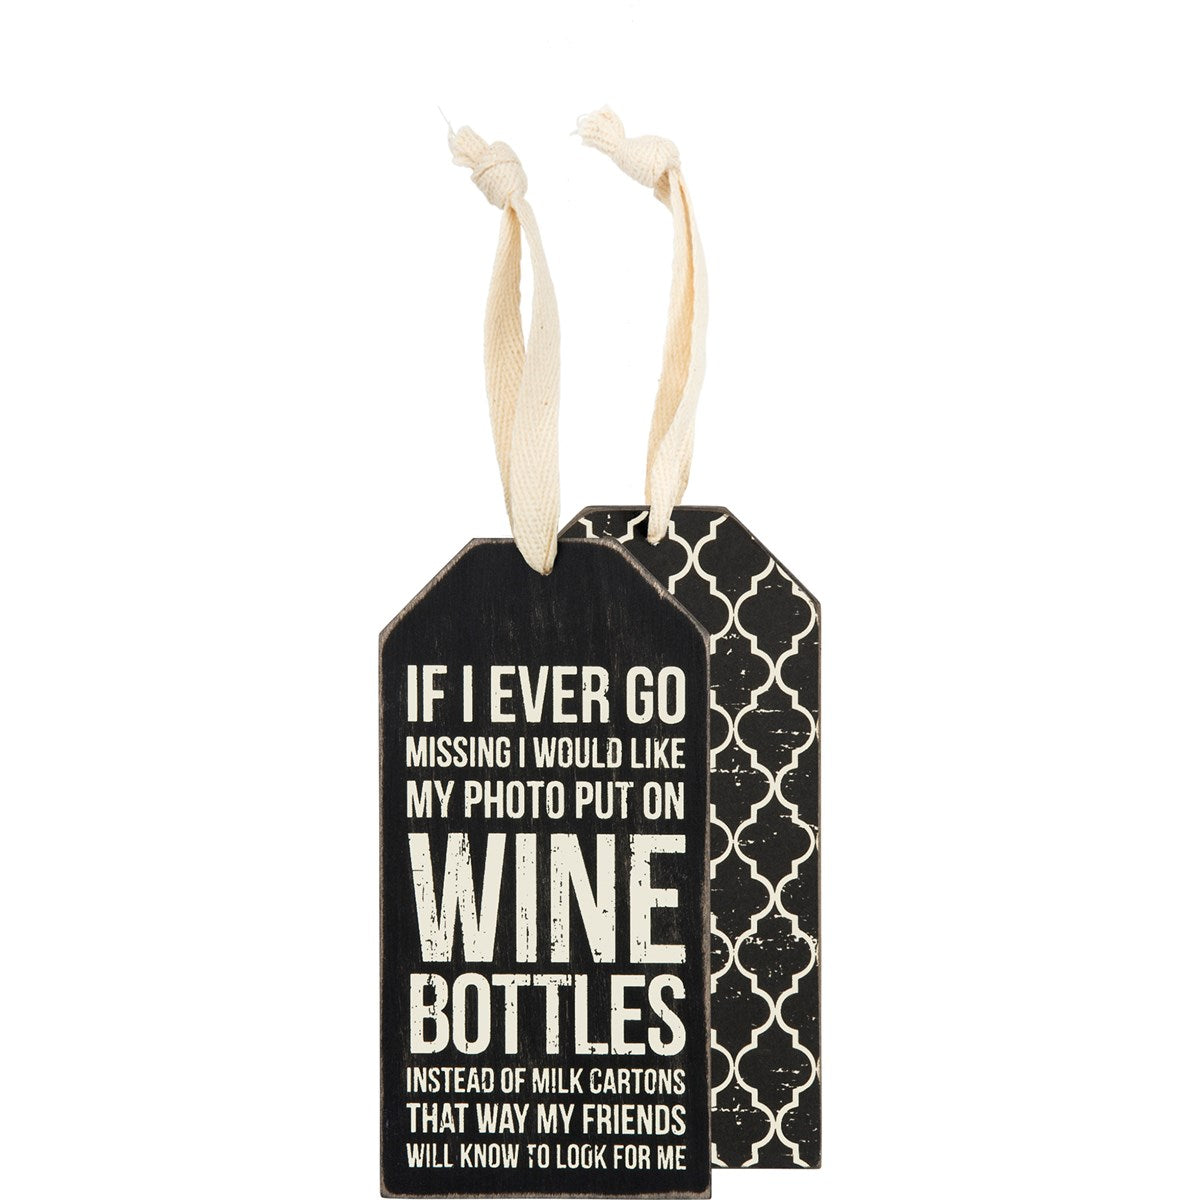 💙 Put My Missing Photo on Wine Bottles - Bottle Tag